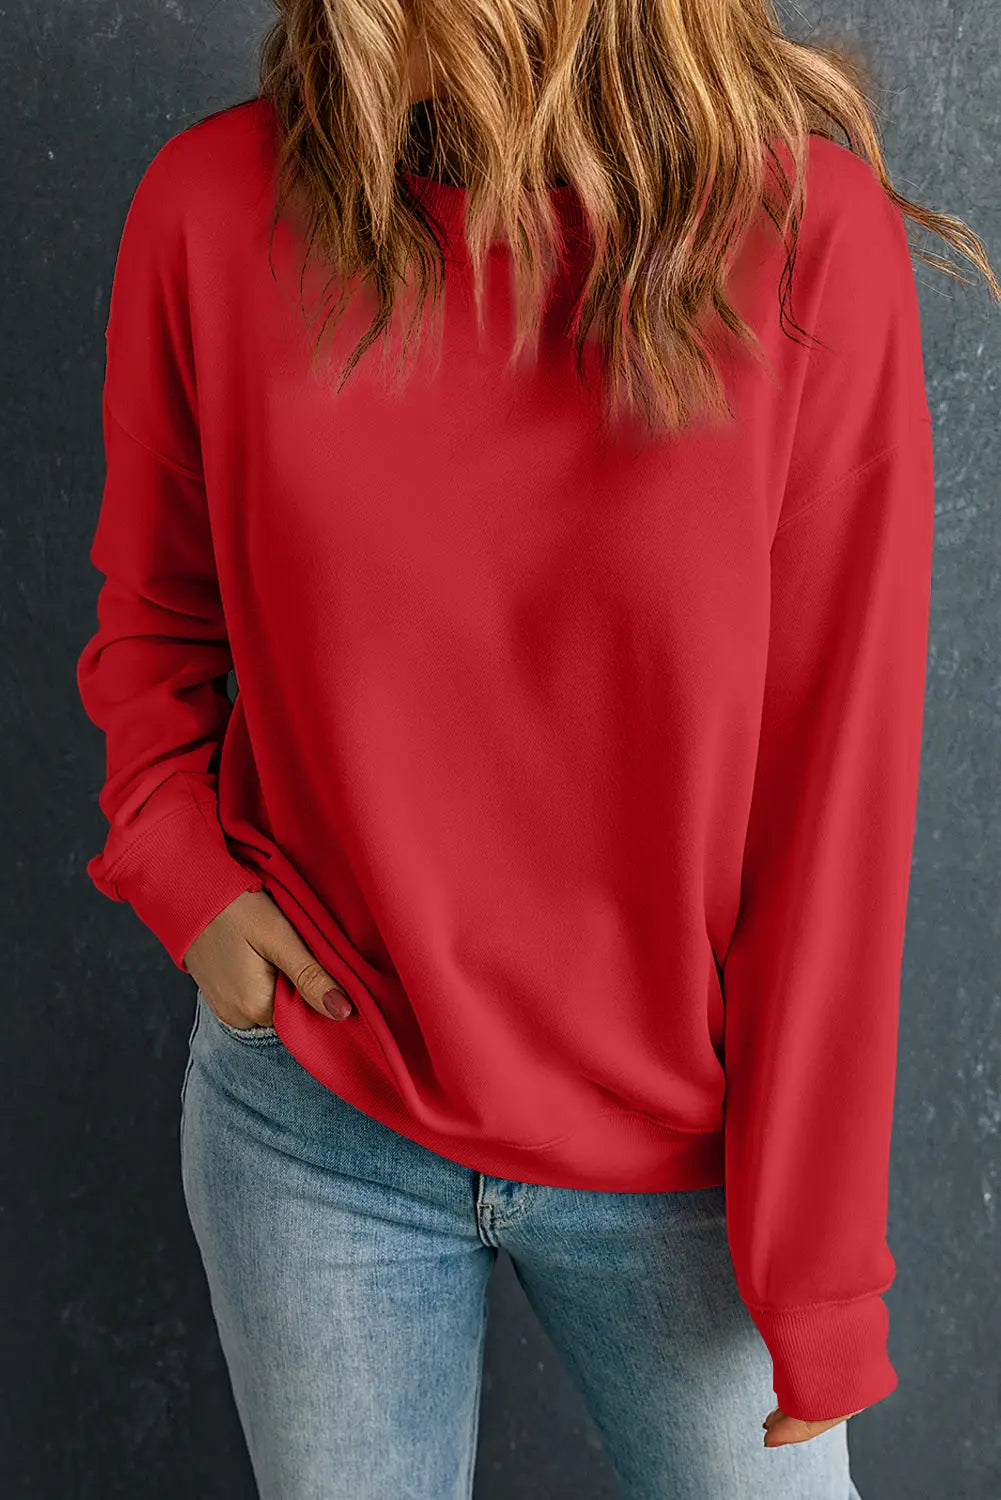 Gray solid classic crewneck pullover sweatshirt - red / 2xl / 50% polyester + 50% cotton - sweatshirts & hoodies